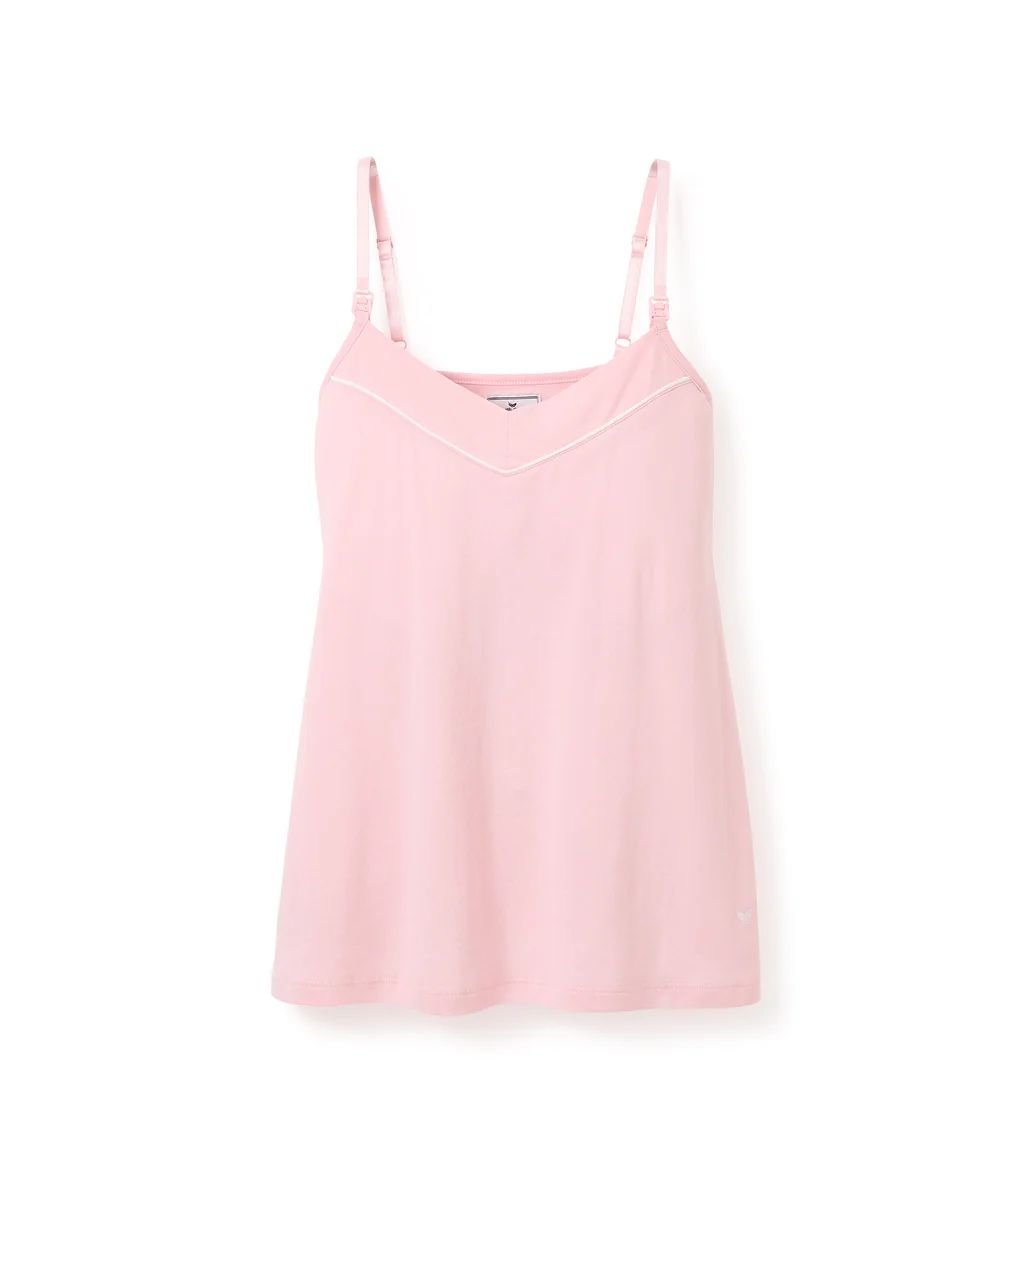 Luxe Pima Pink Maternity Camisole | Petite Plume